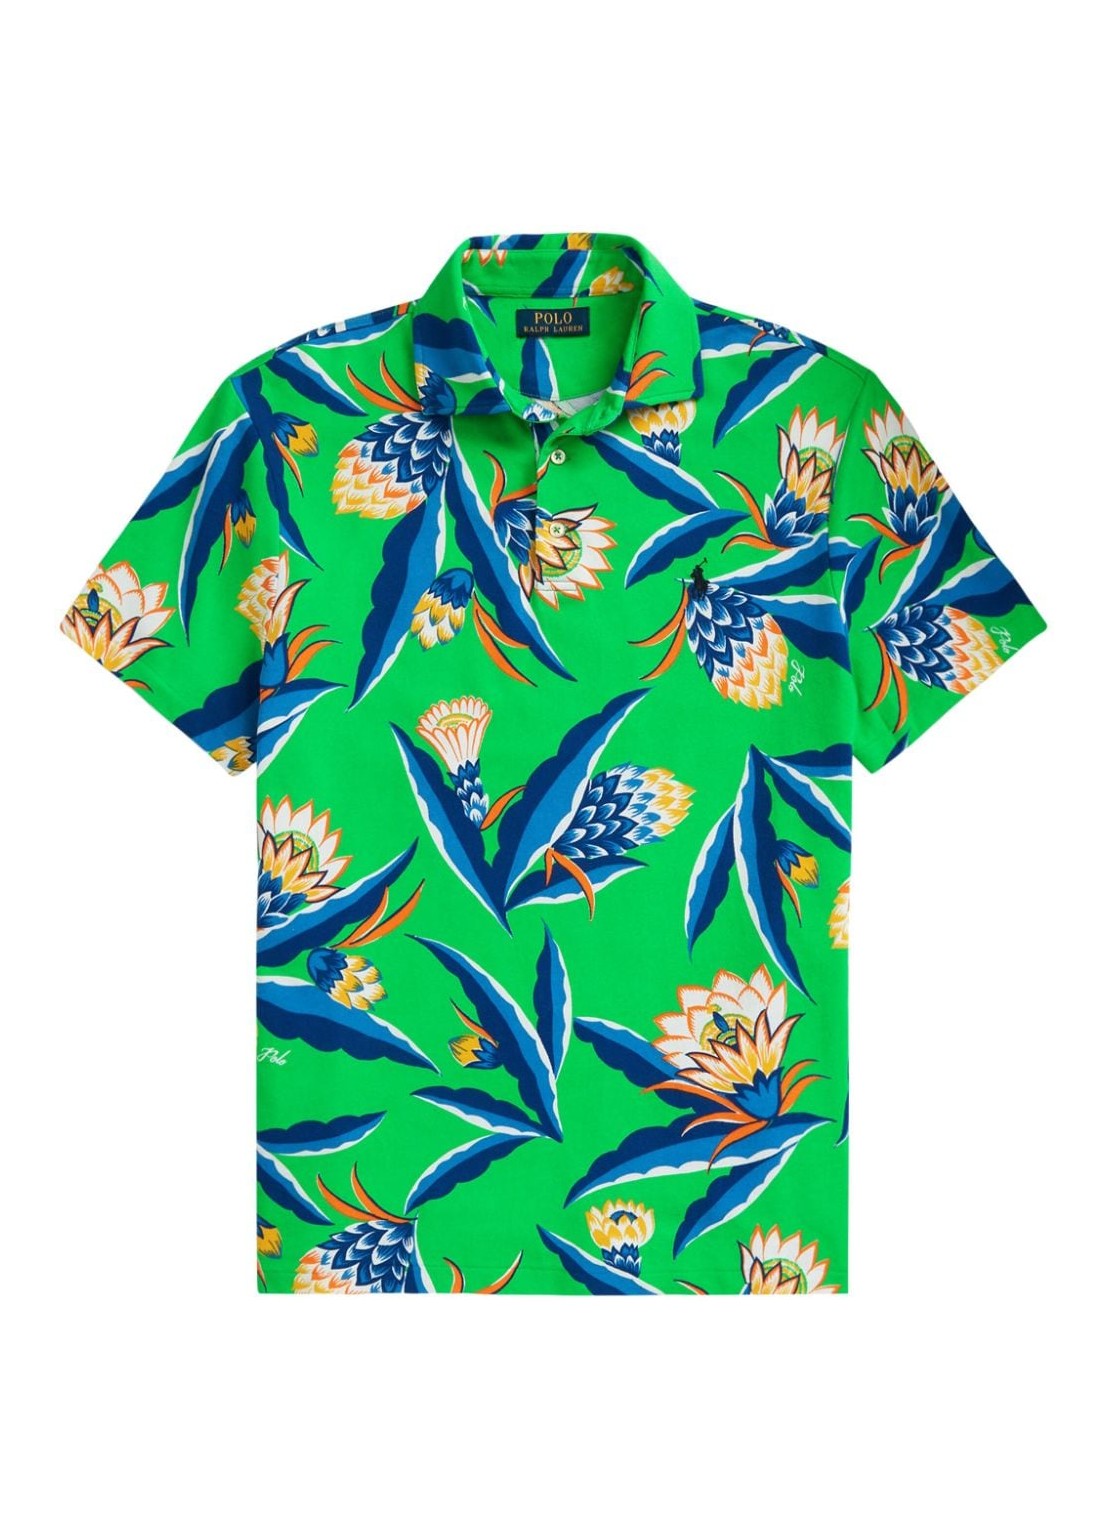 Camiseria polo ralph lauren shirt man sscsm2-short sleeve-polo shirt 710926277001 bonheur floral gre